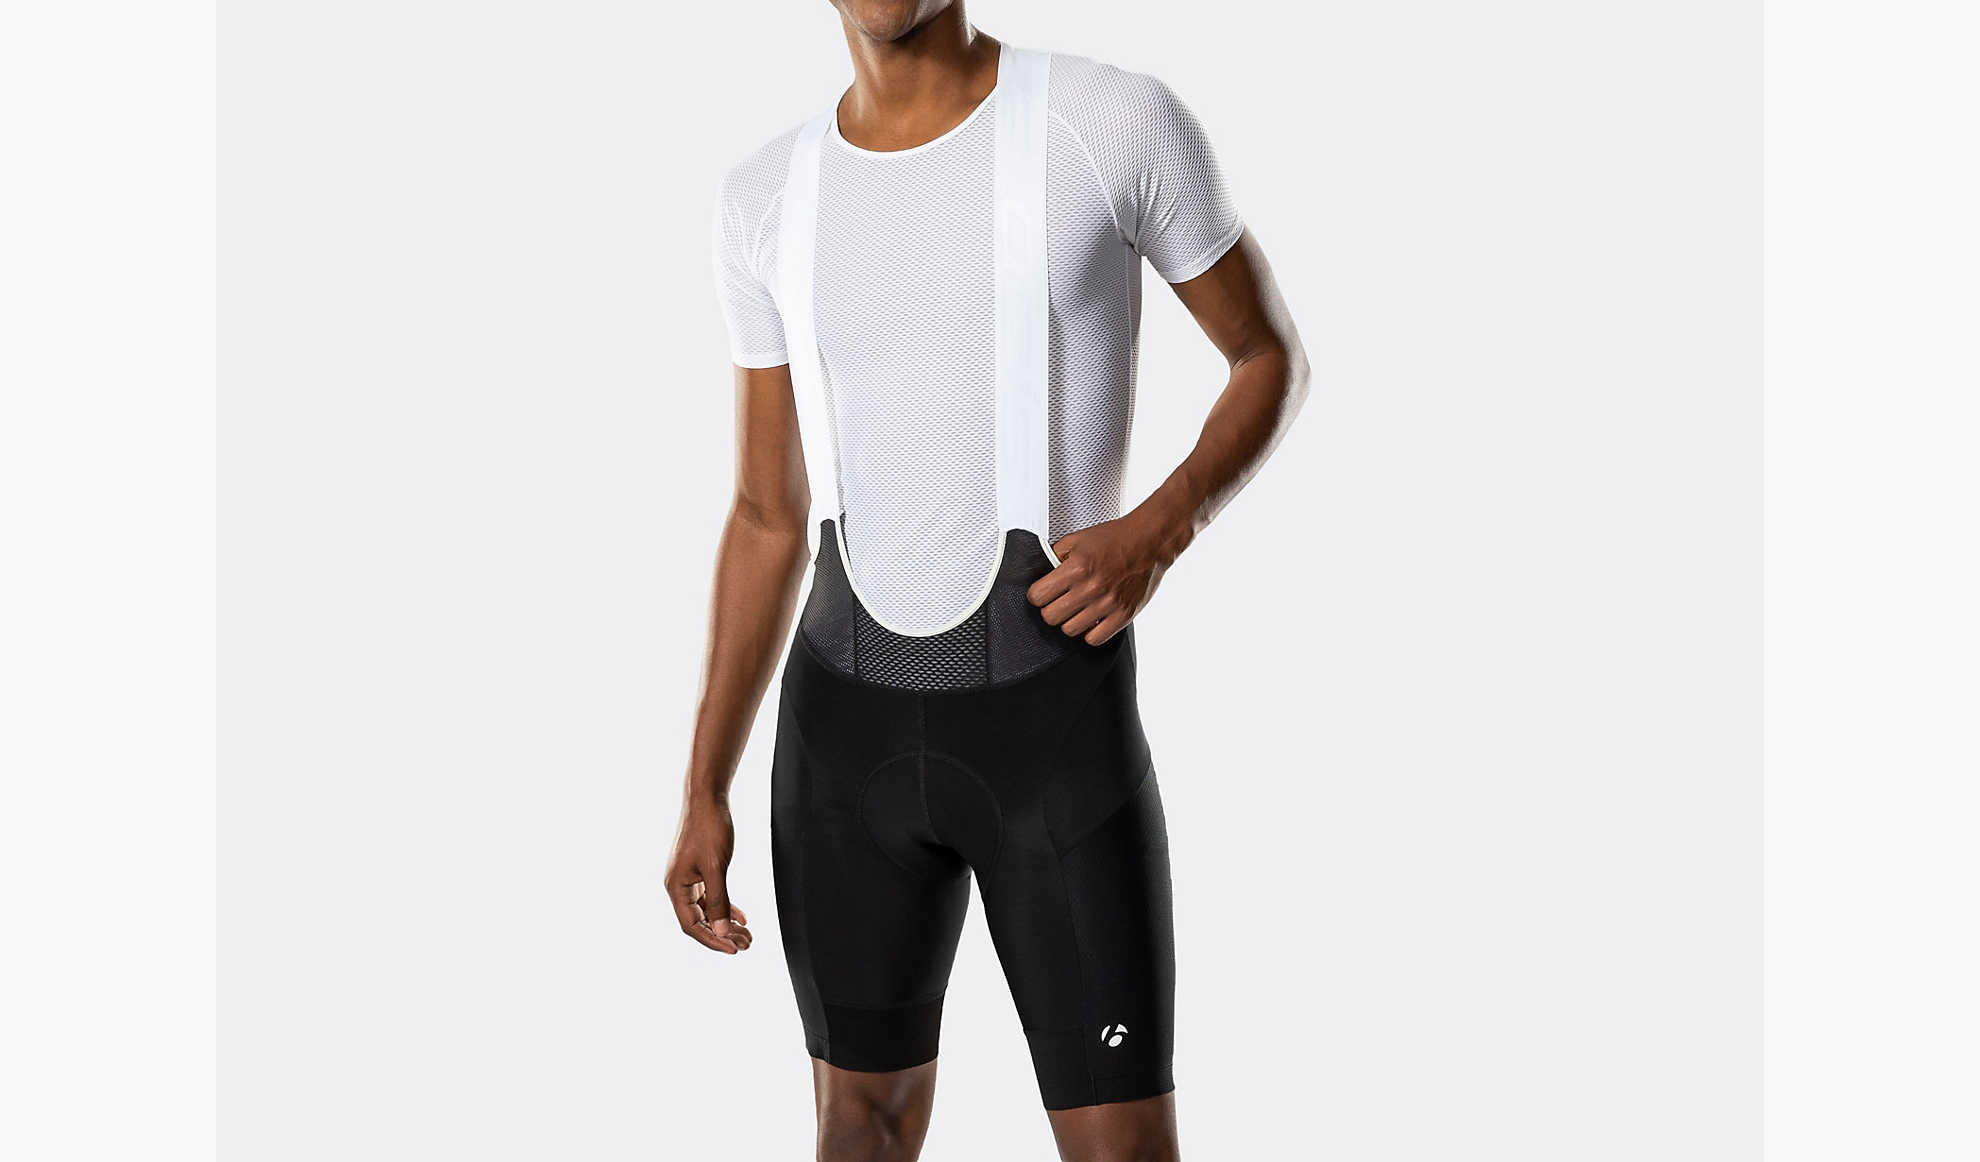 Bontrager Velocis Bib Short | Cycling shorts & bibs | Cycling apparel ...